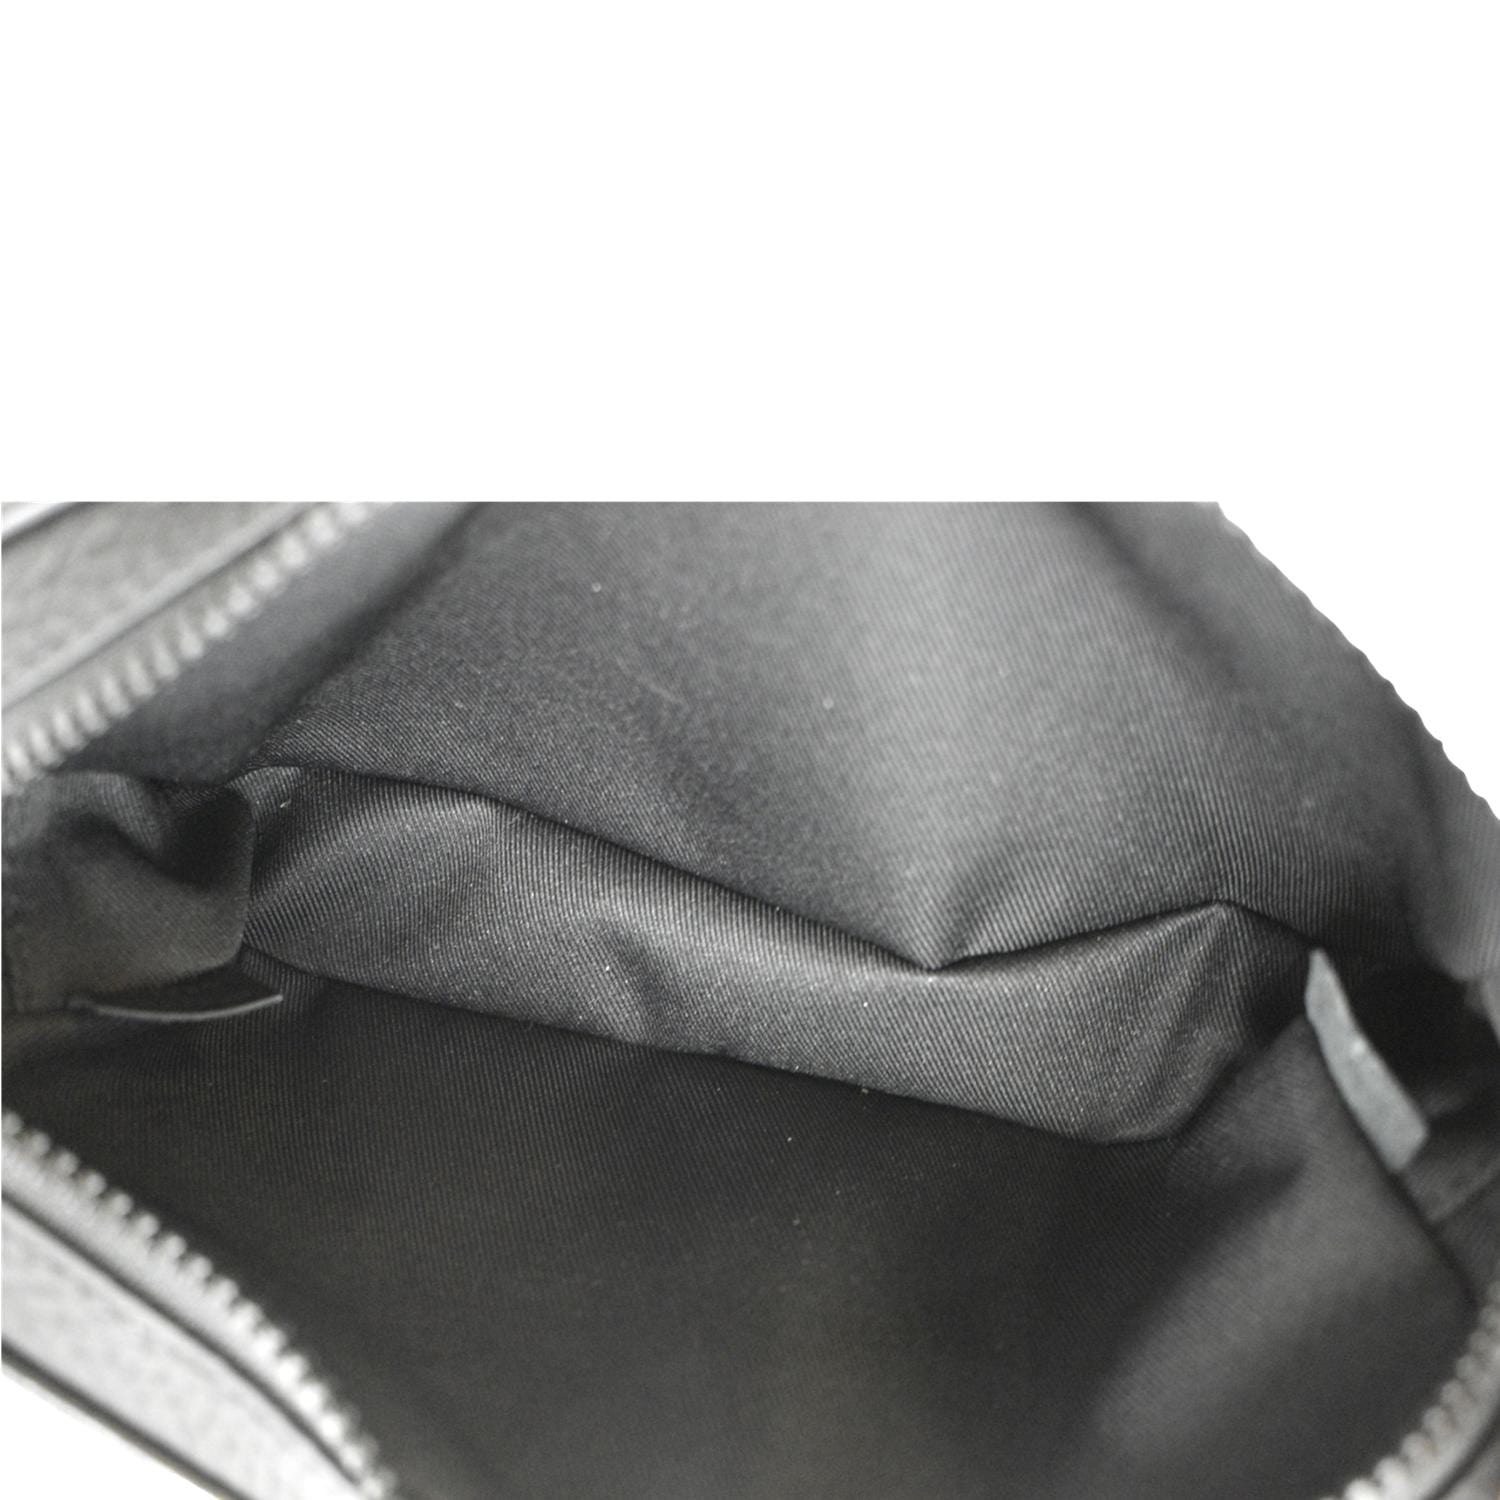 Louis Vuitton, Bags, Louis Vuitton Crossover Bag Are Bum Bag